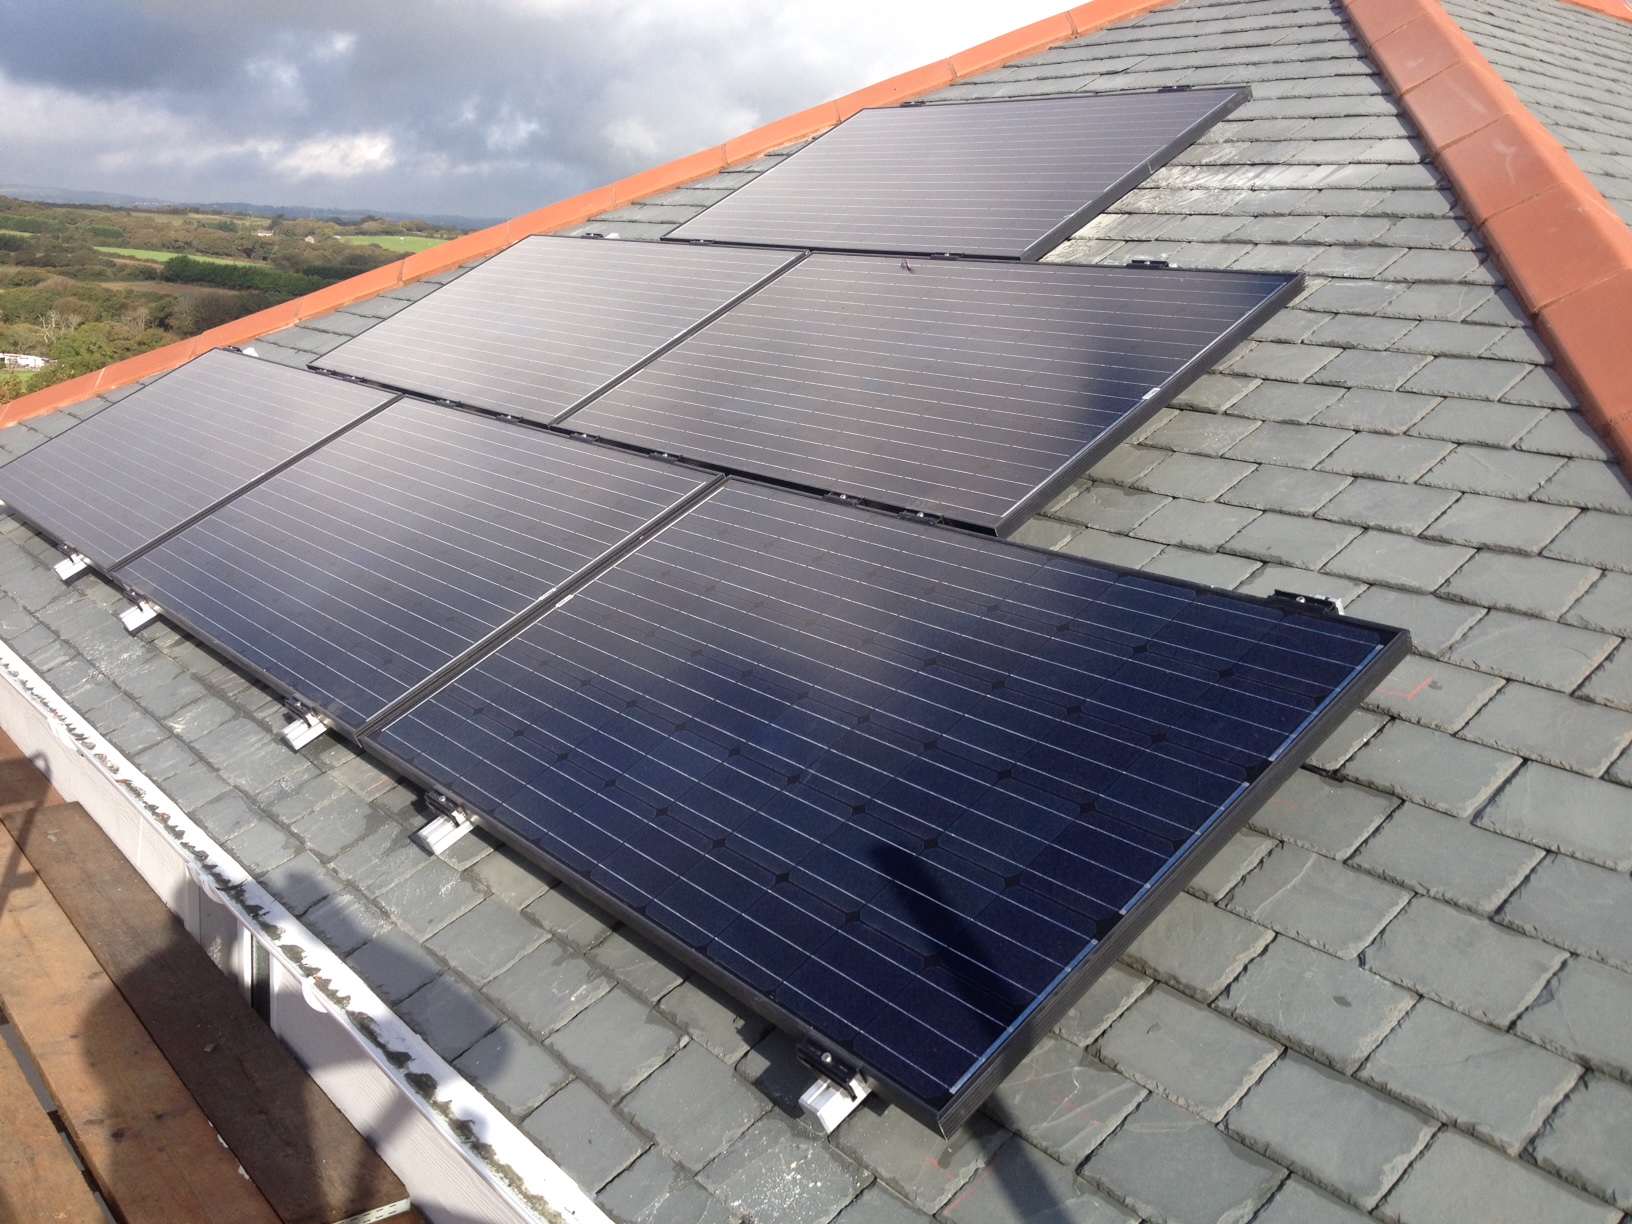 A 1.59kW Canadian Solar PV system installed in Mawgan, Cornwall